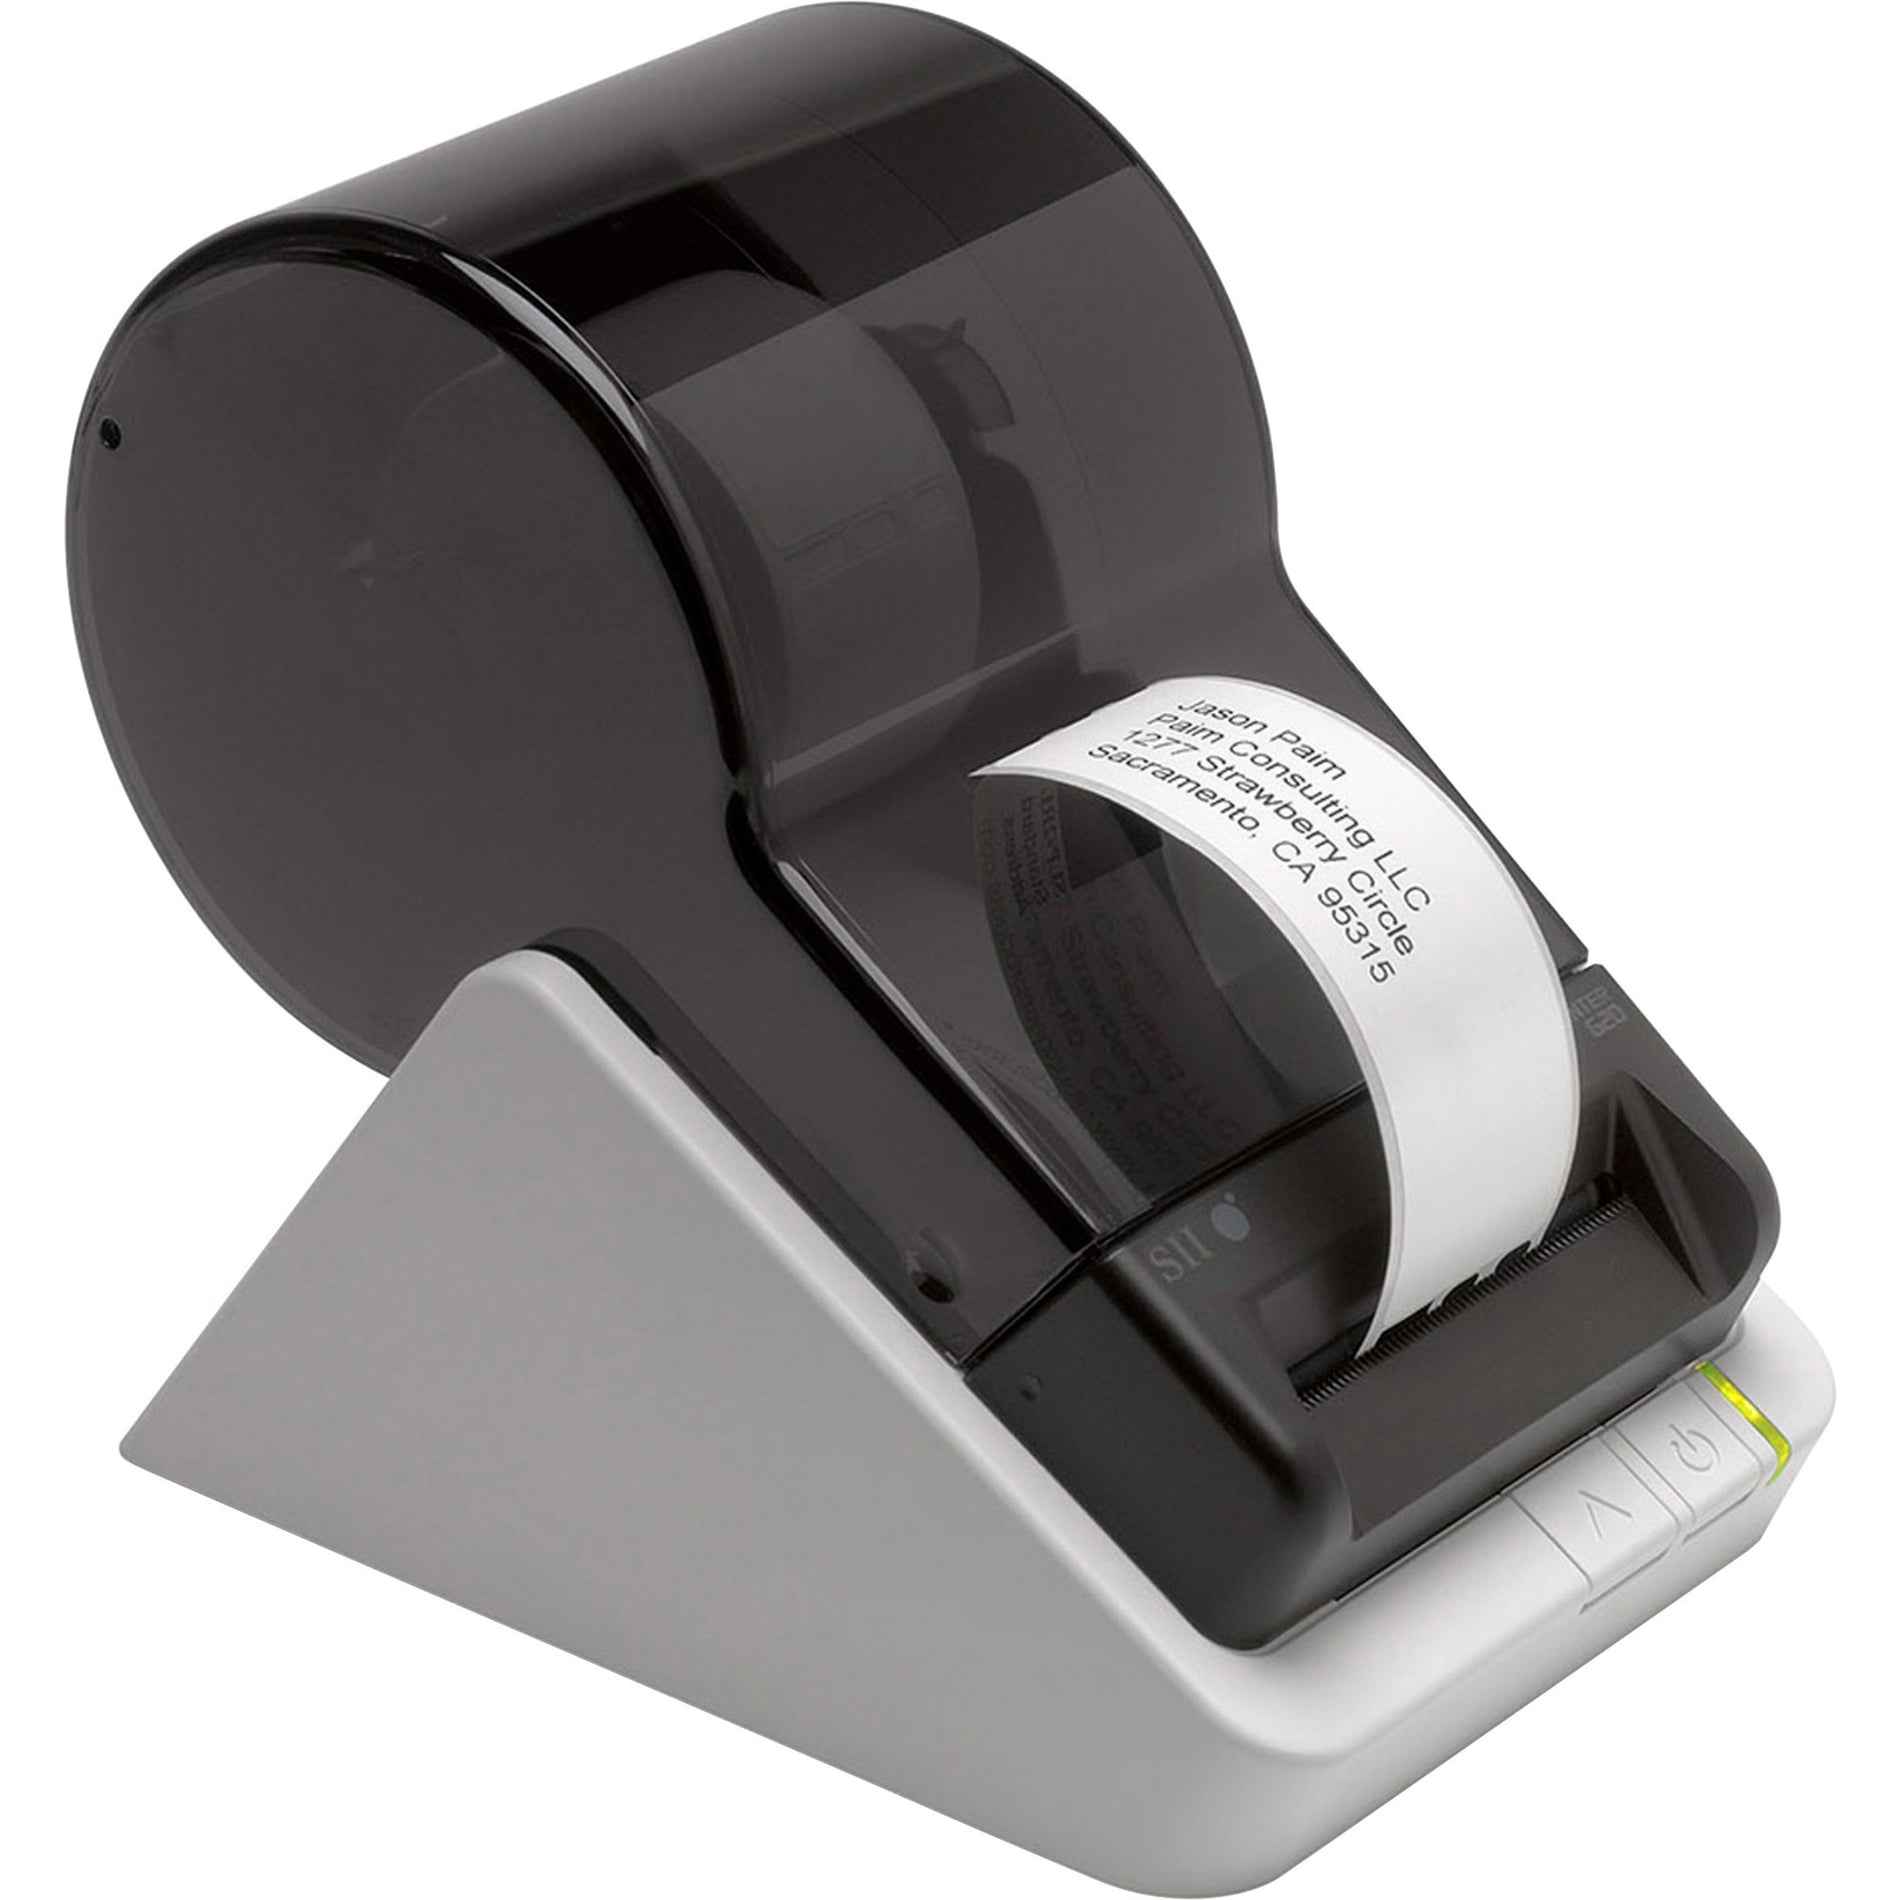 Seiko SLP620 Smart Label Printer, 2.76in/sec, USB, PC/MAC